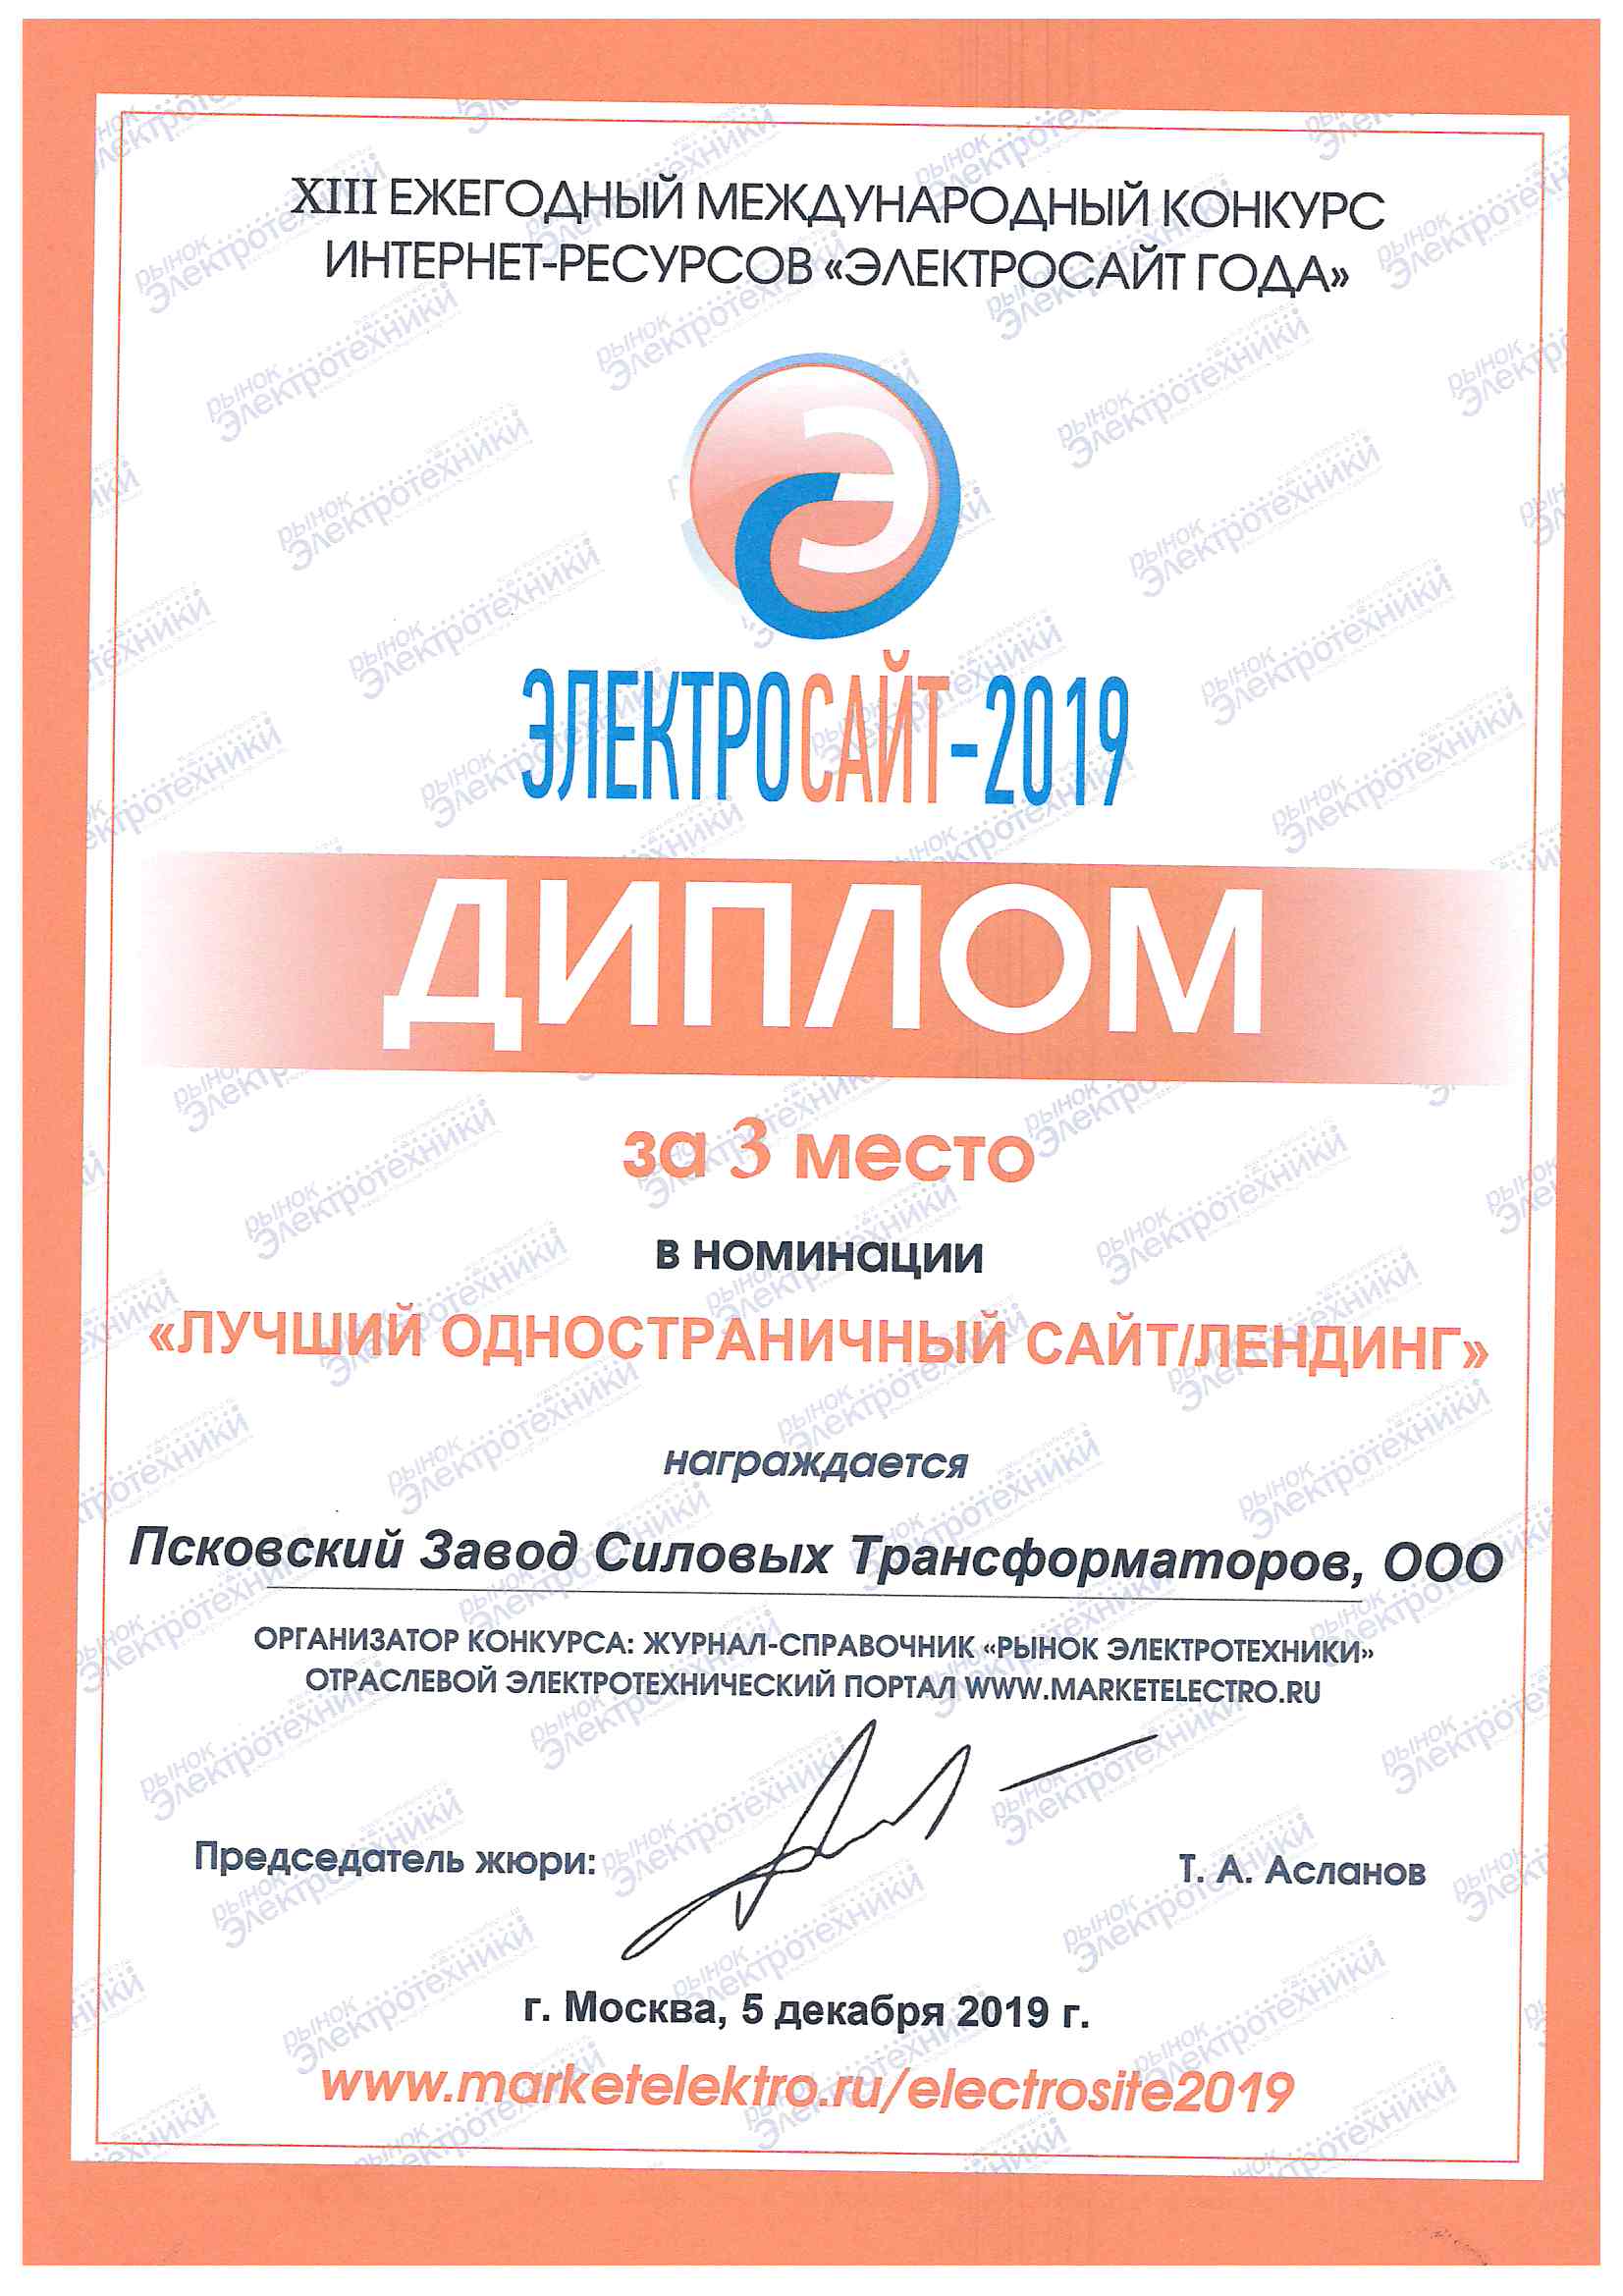 Наш сайт получил диплом на конкурсе "Электросайт-2019"